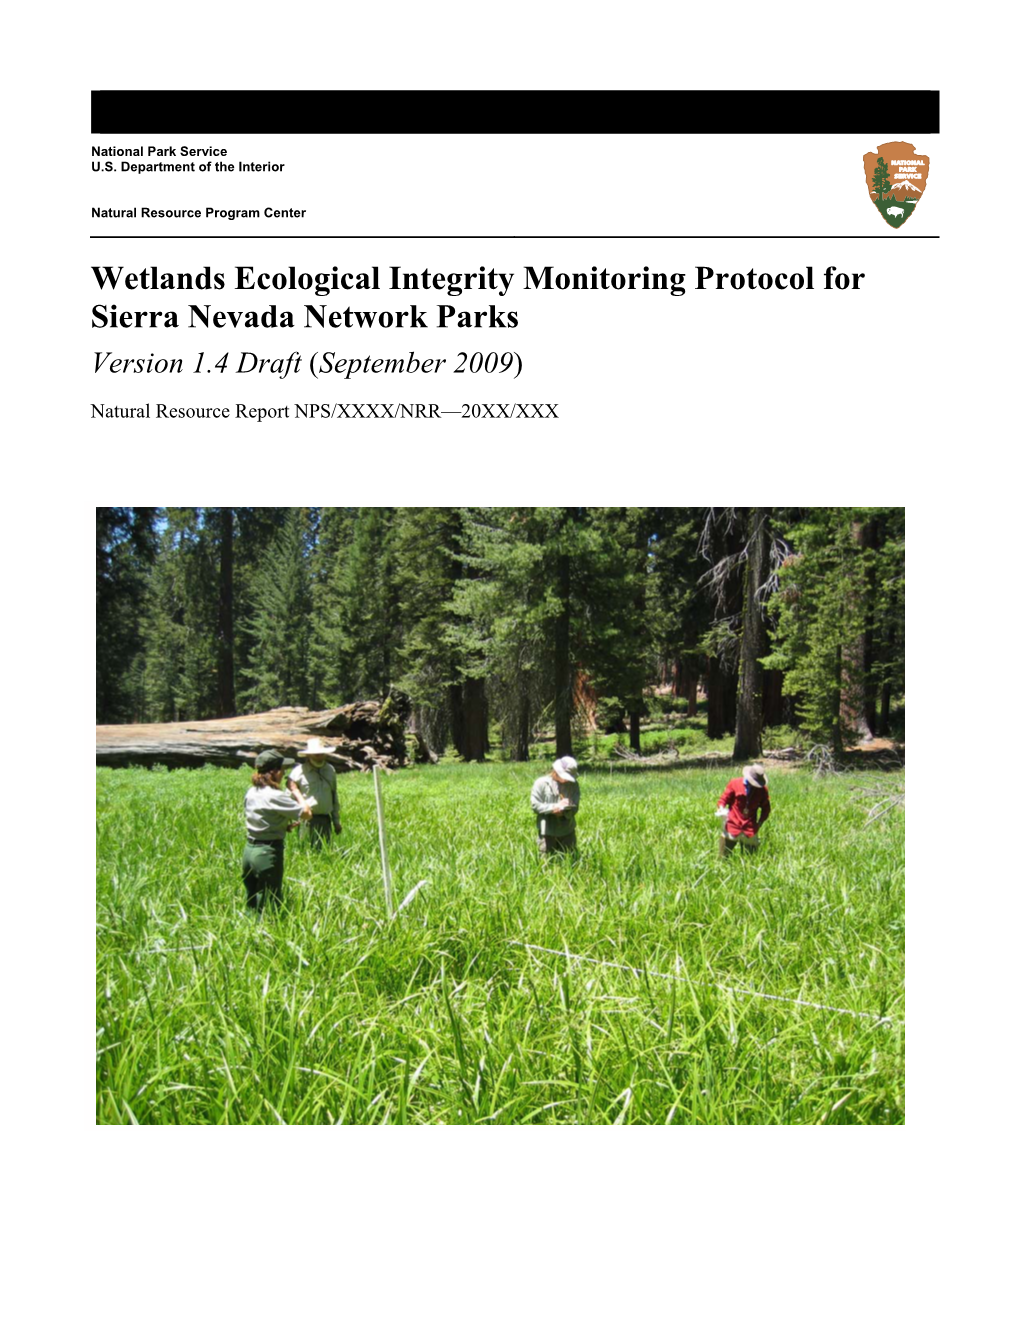 Wetlands Ecological Integrity Monitoring Protocol for Sierra Nevada Network Parks Version 1.4 Draft (September 2009)